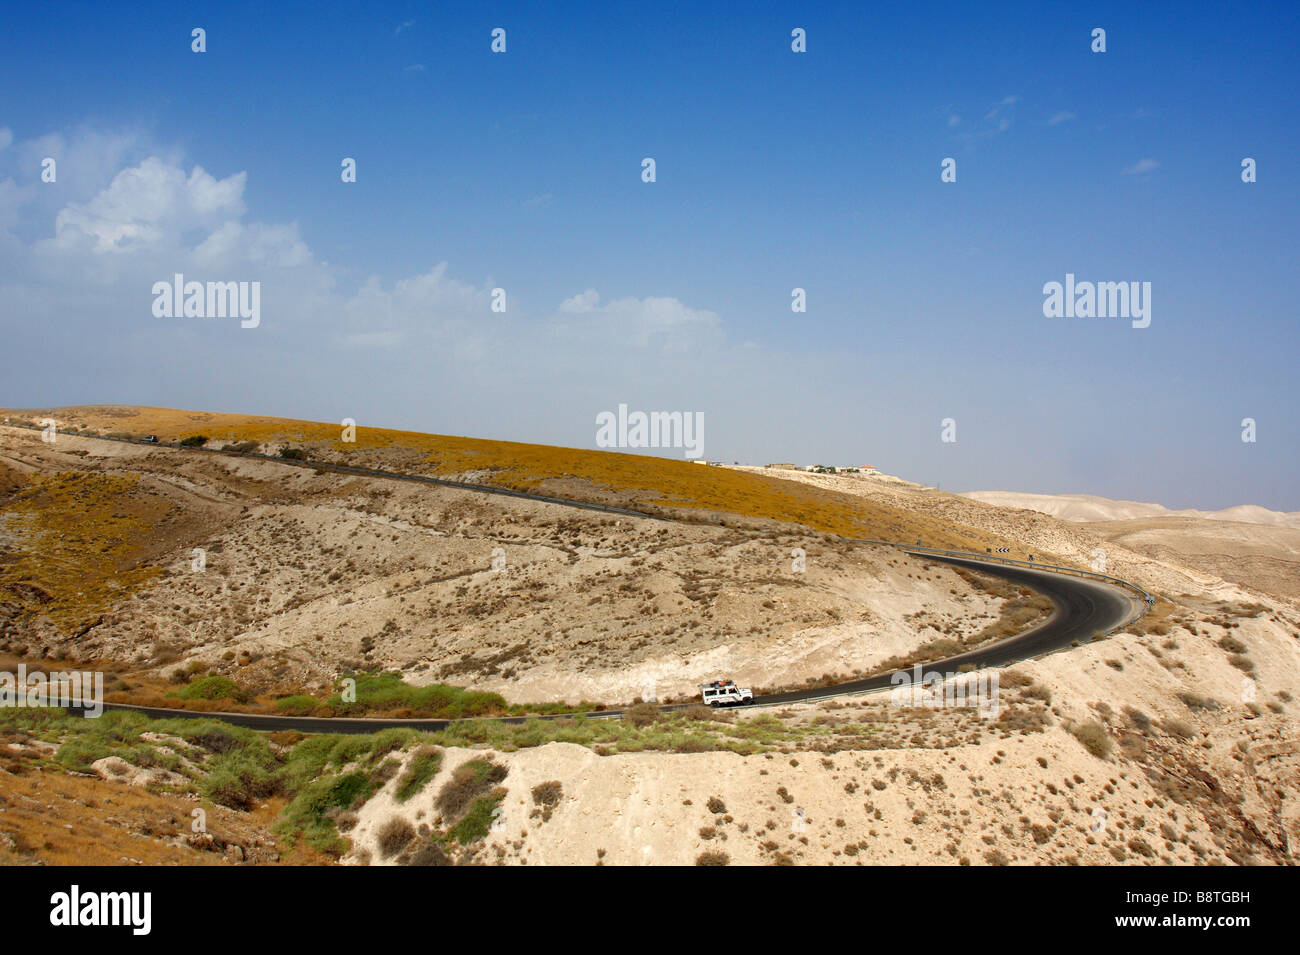 Israel Judea Desert landscape winding road Stock Photo